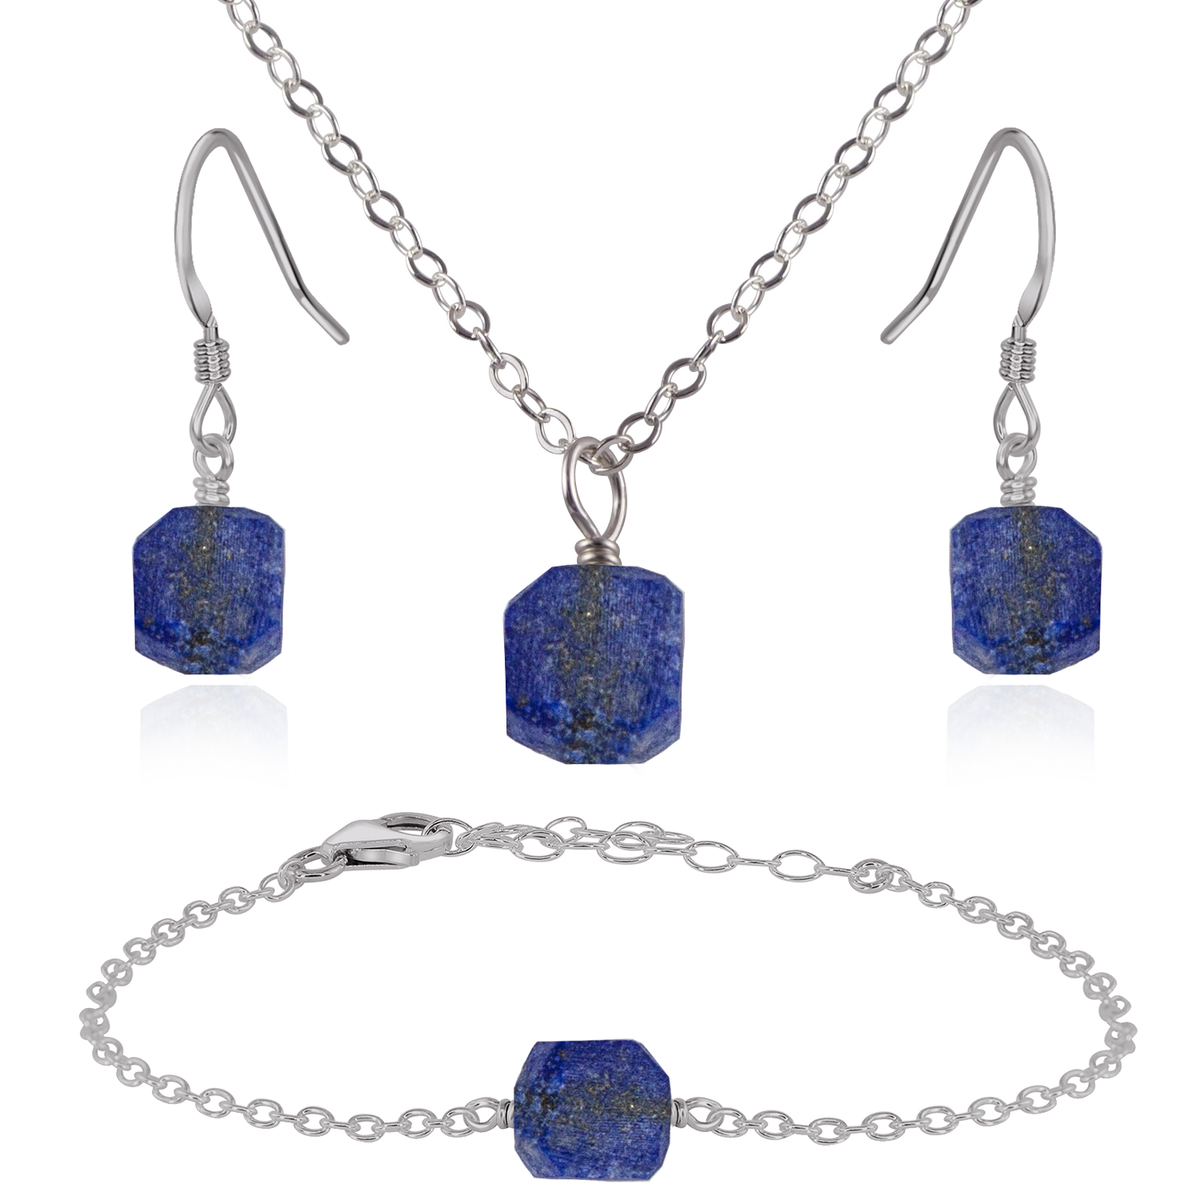 Raw Lapis Lazuli Crystal Jewellery Set - Raw Lapis Lazuli Crystal Jewellery Set - Stainless Steel / Cable / Necklace & Earrings & Bracelet - Luna Tide Handmade Crystal Jewellery